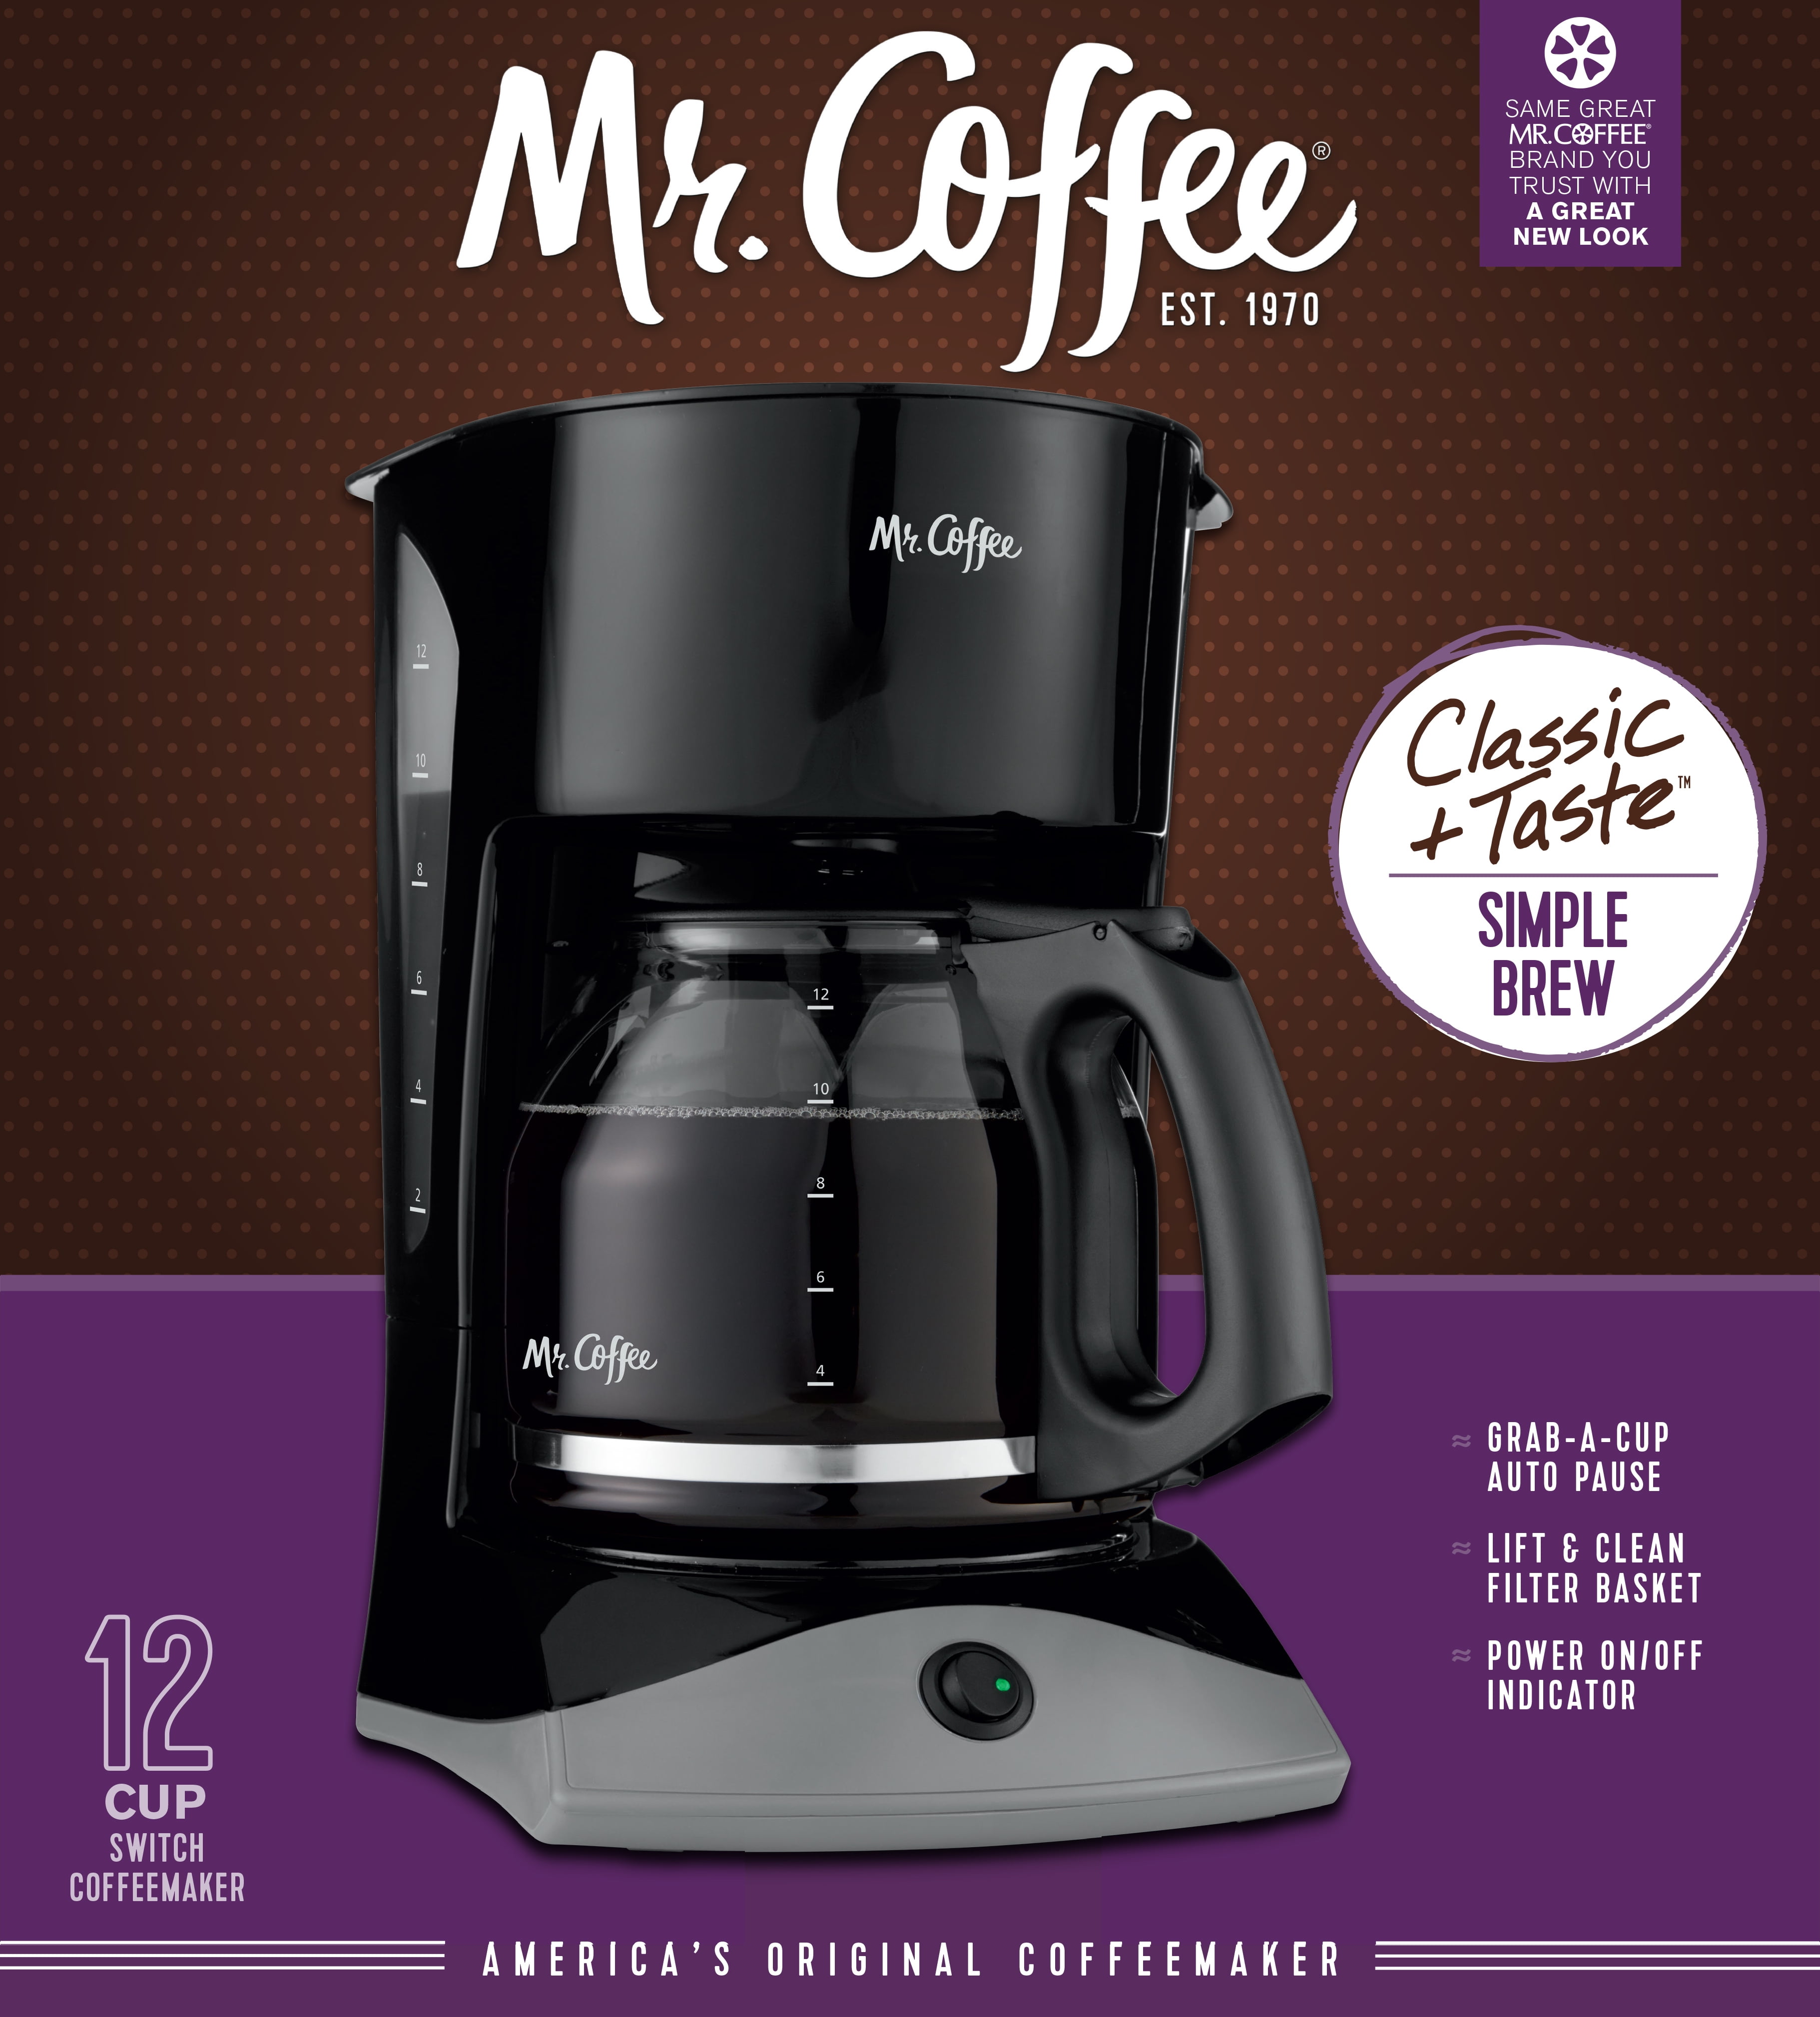  Mr. Coffee 12-Cup Switch Coffee Maker, Black: Drip